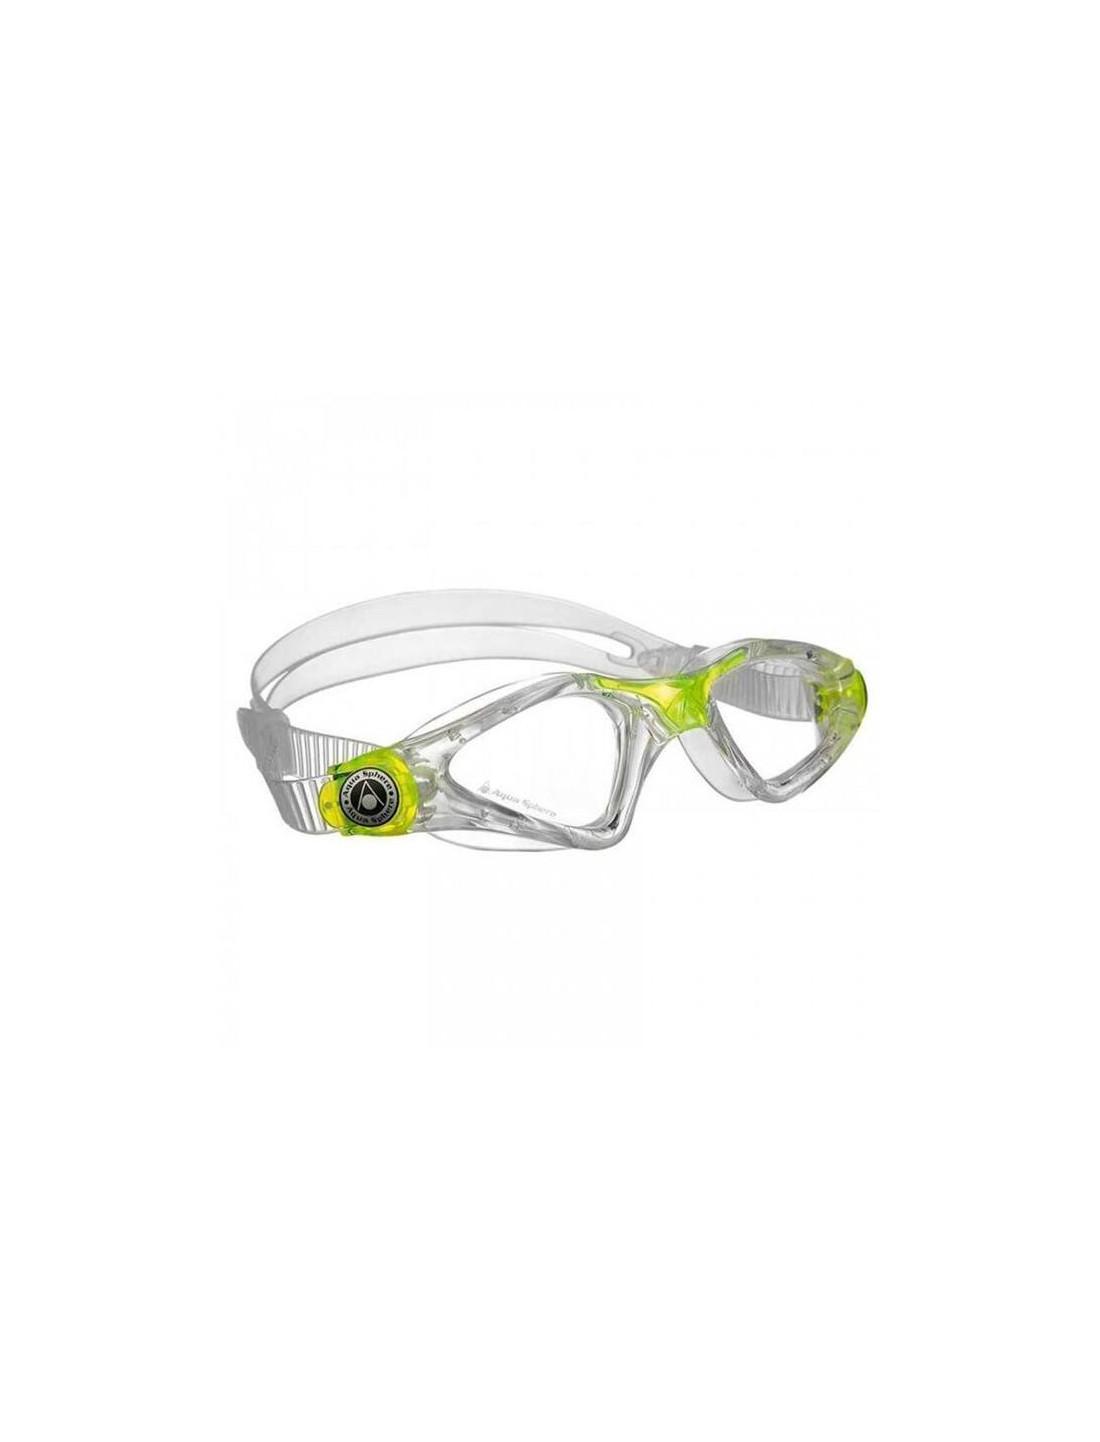 Gafas de natación KAYENNE- Trasparente/amarillo. Aqua Sphere